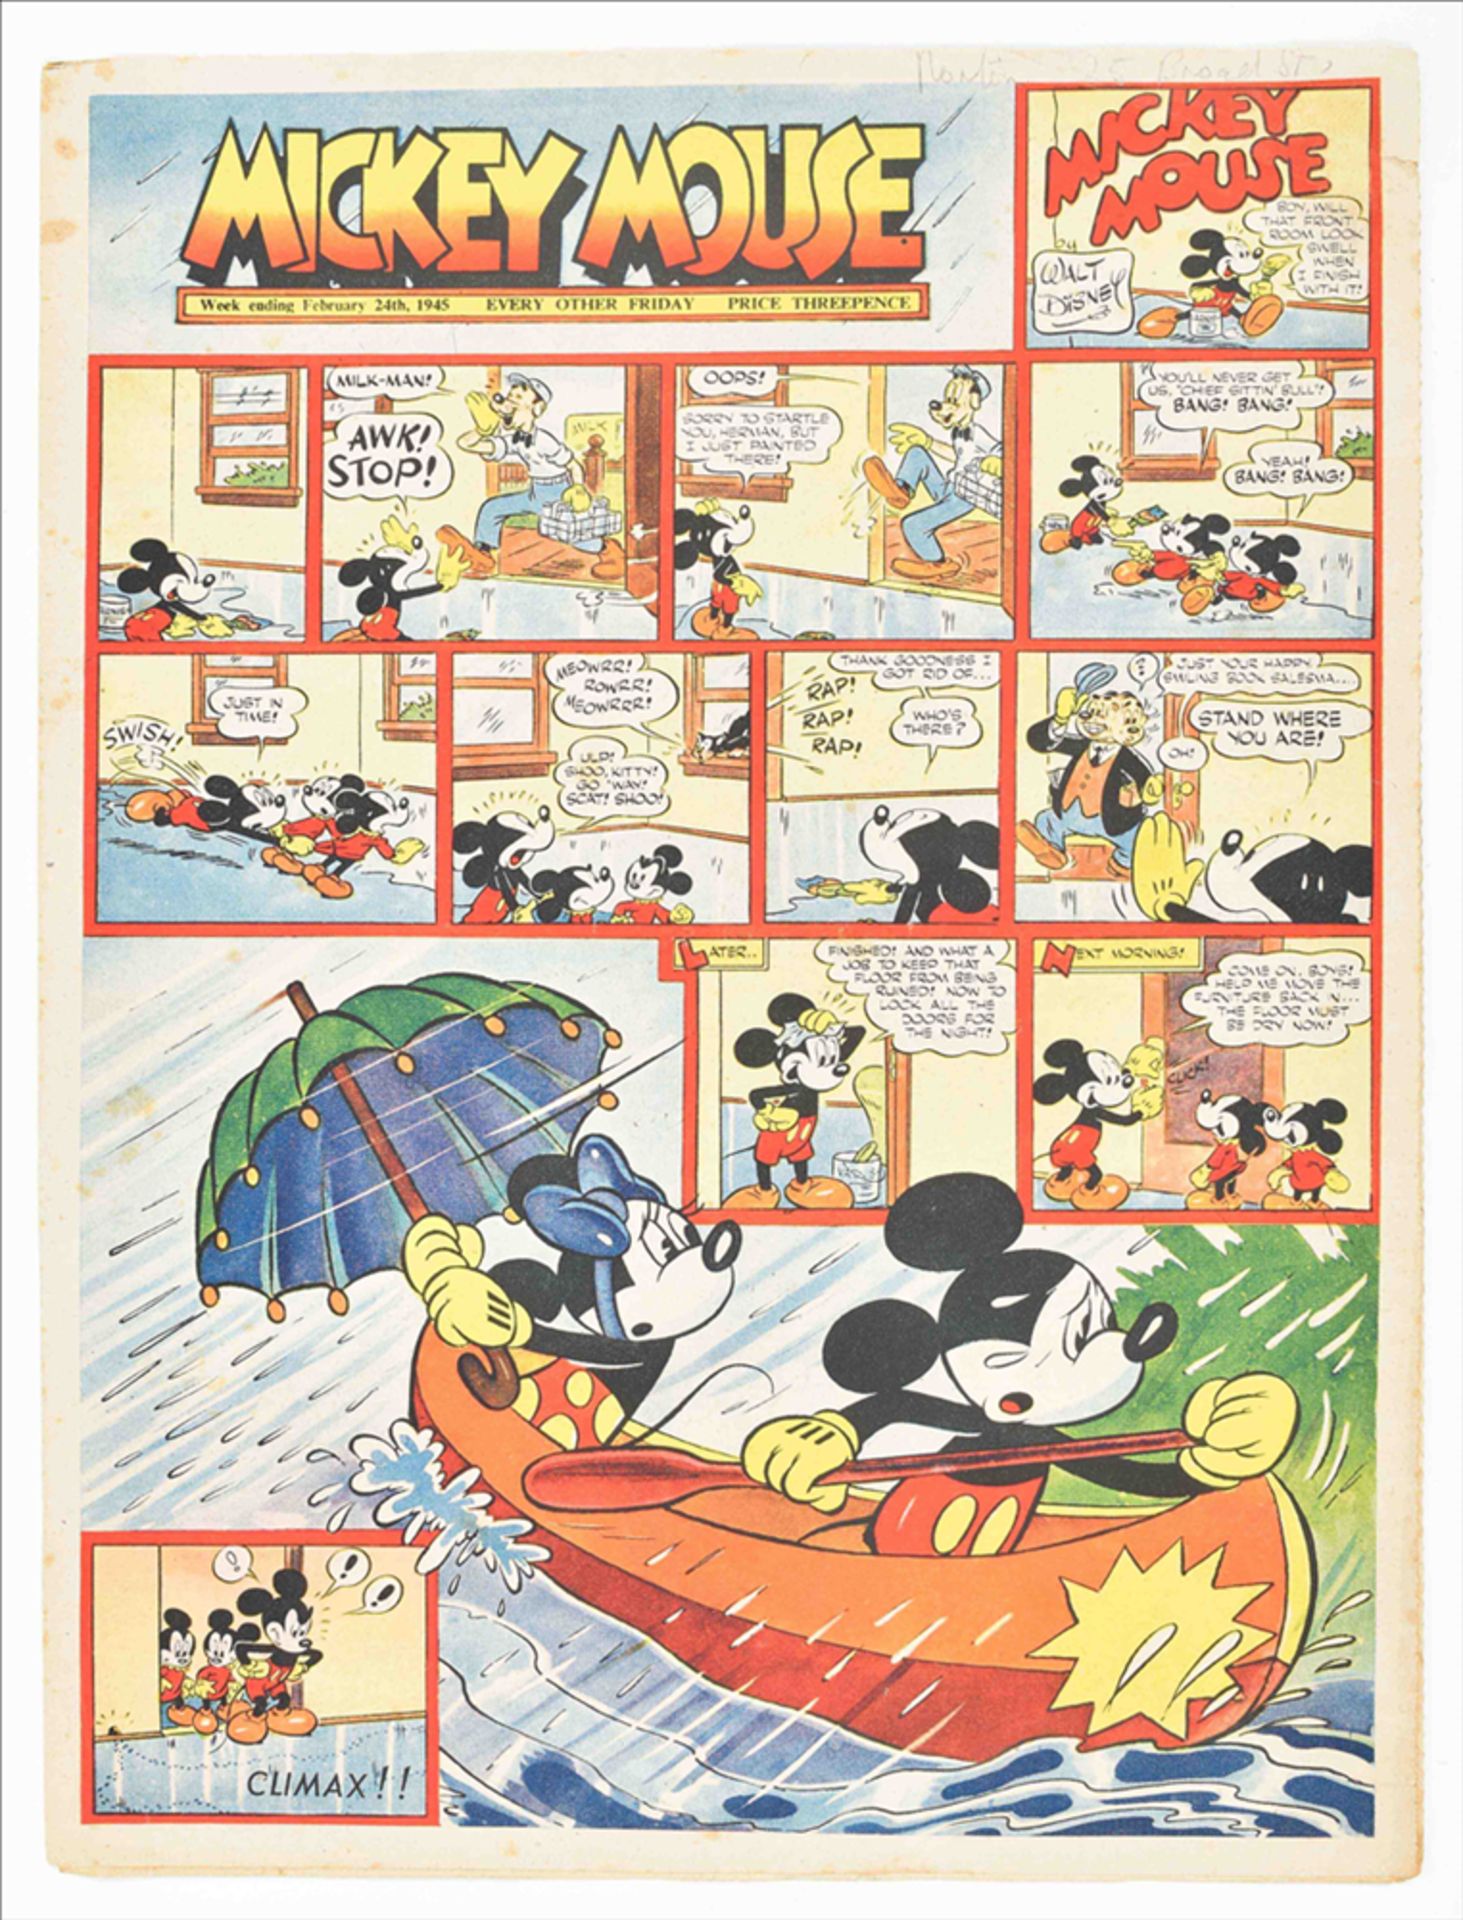 Walt Disney. Mickey Mouse Weekly - Image 6 of 8